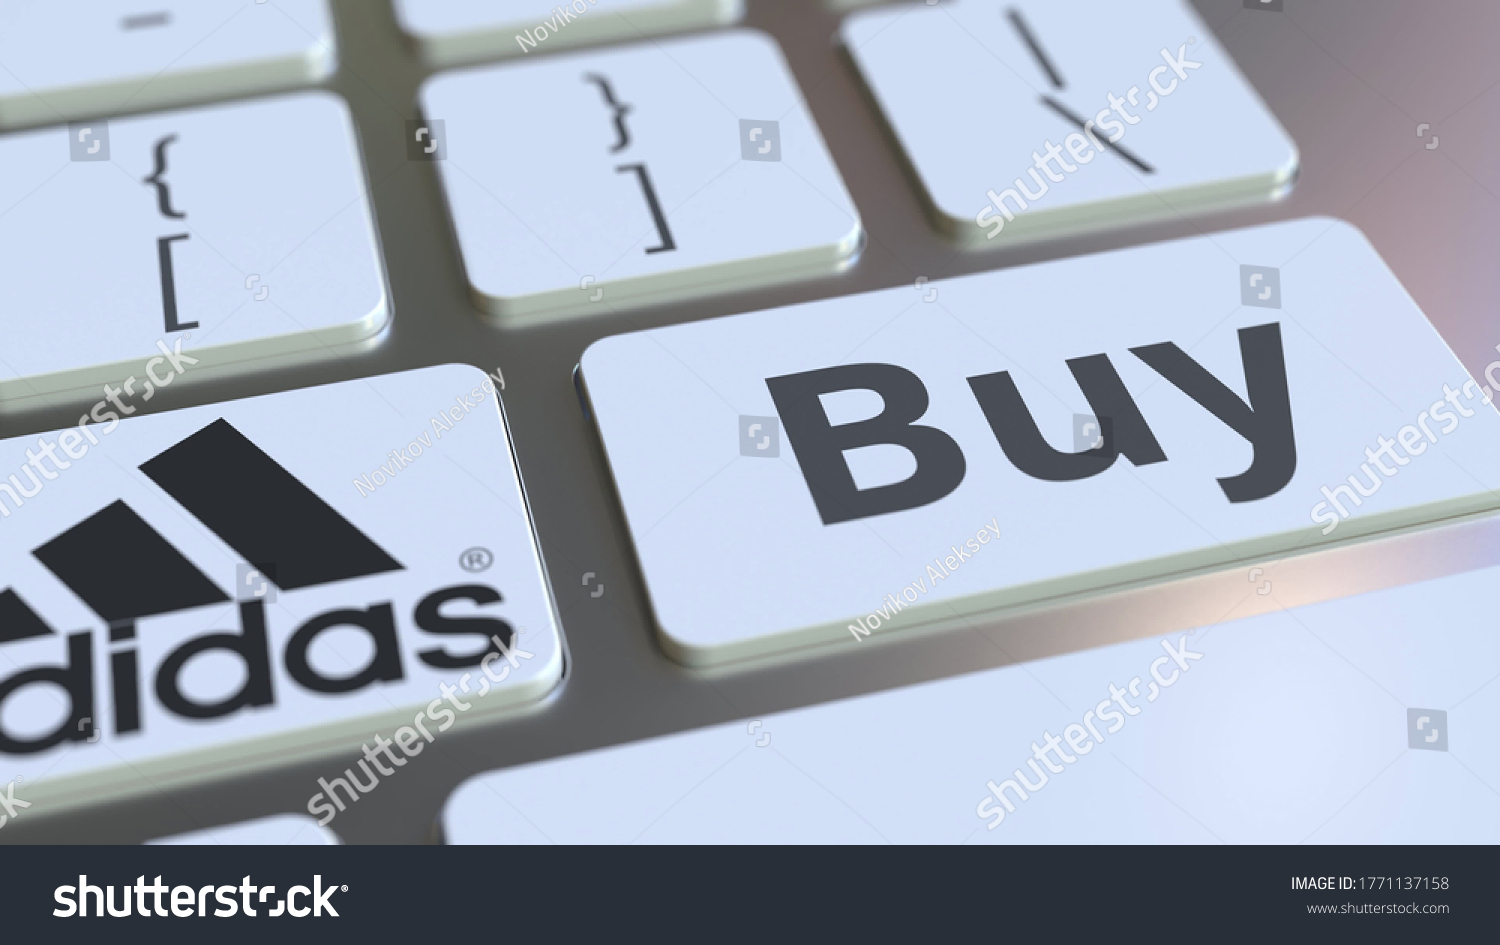 adidas stock buy